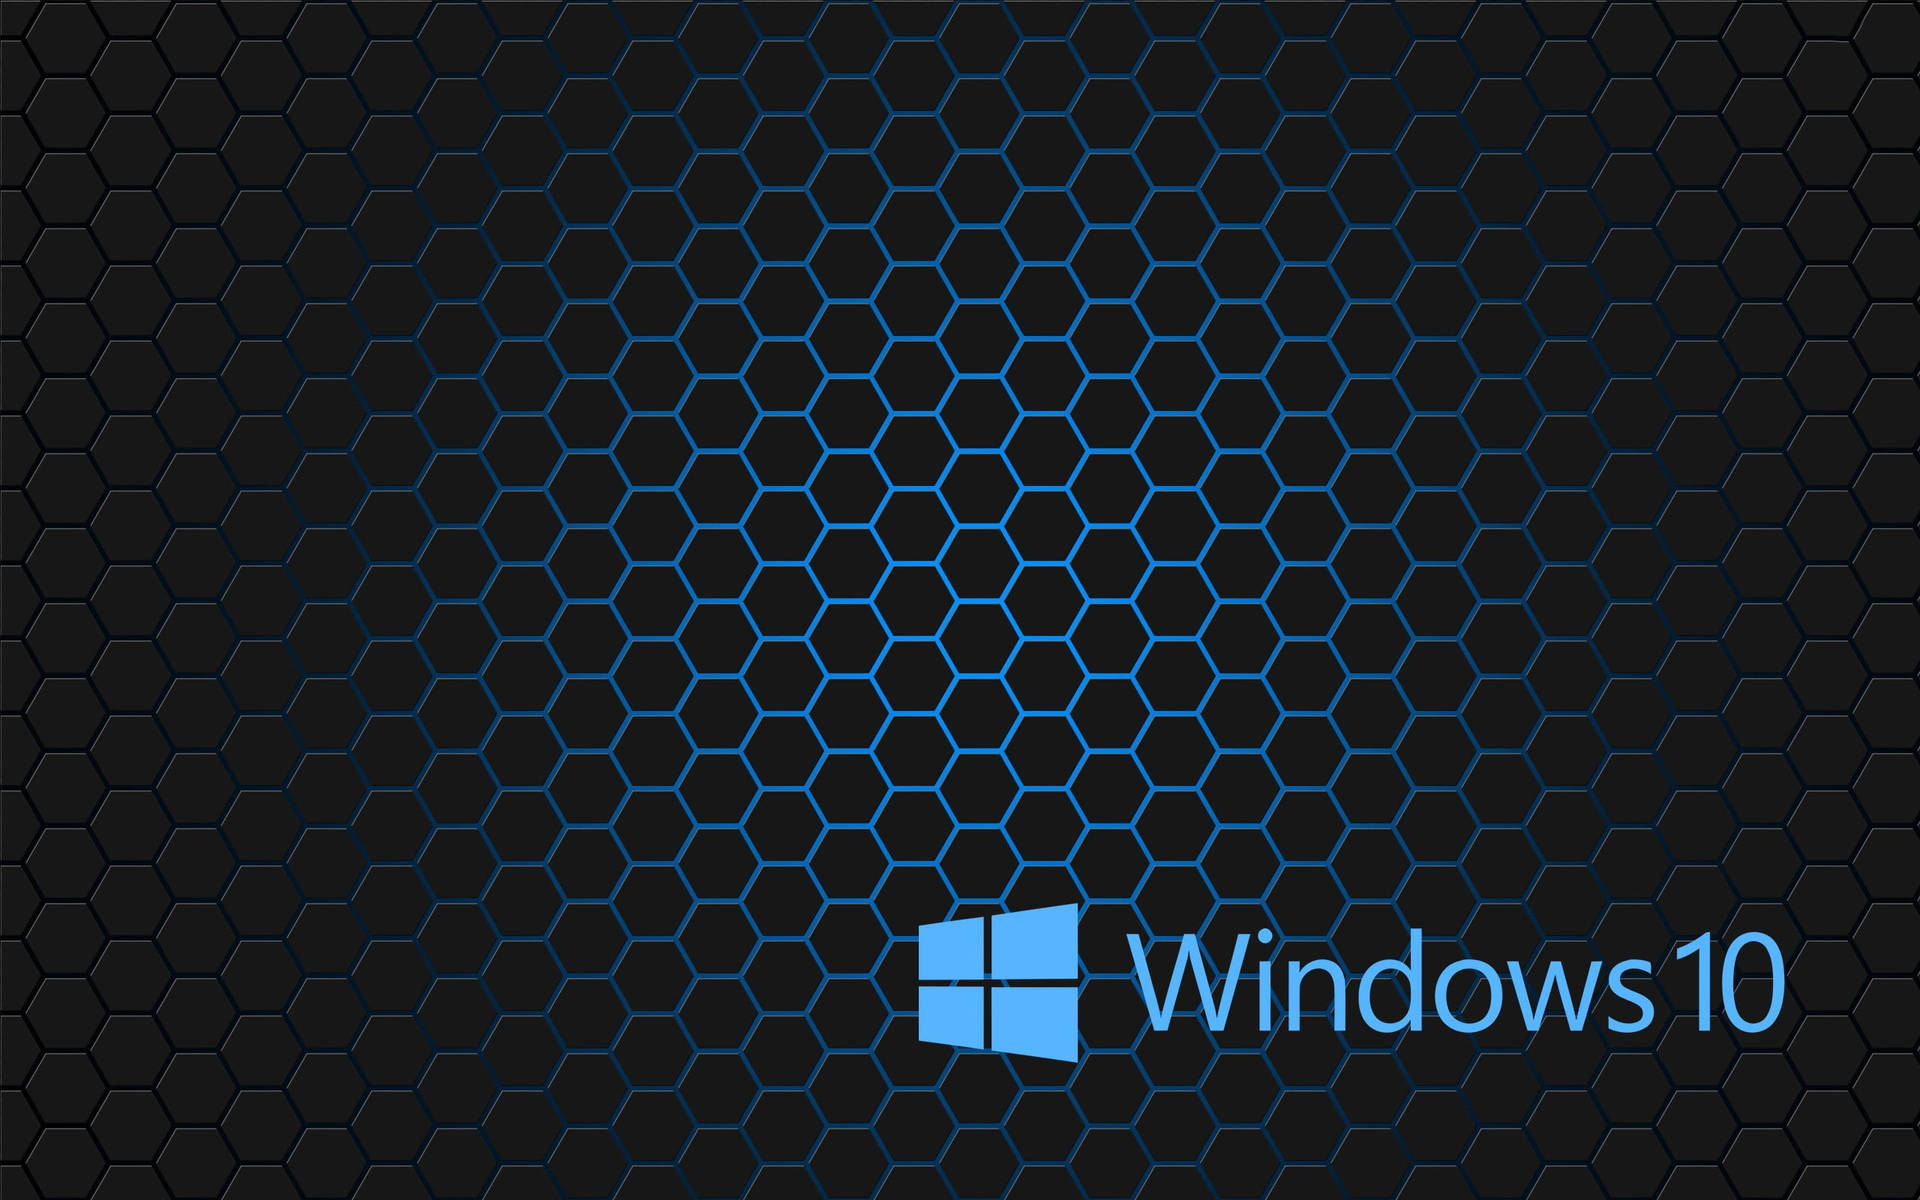 Hexagon Tiles Windows 10 Theme